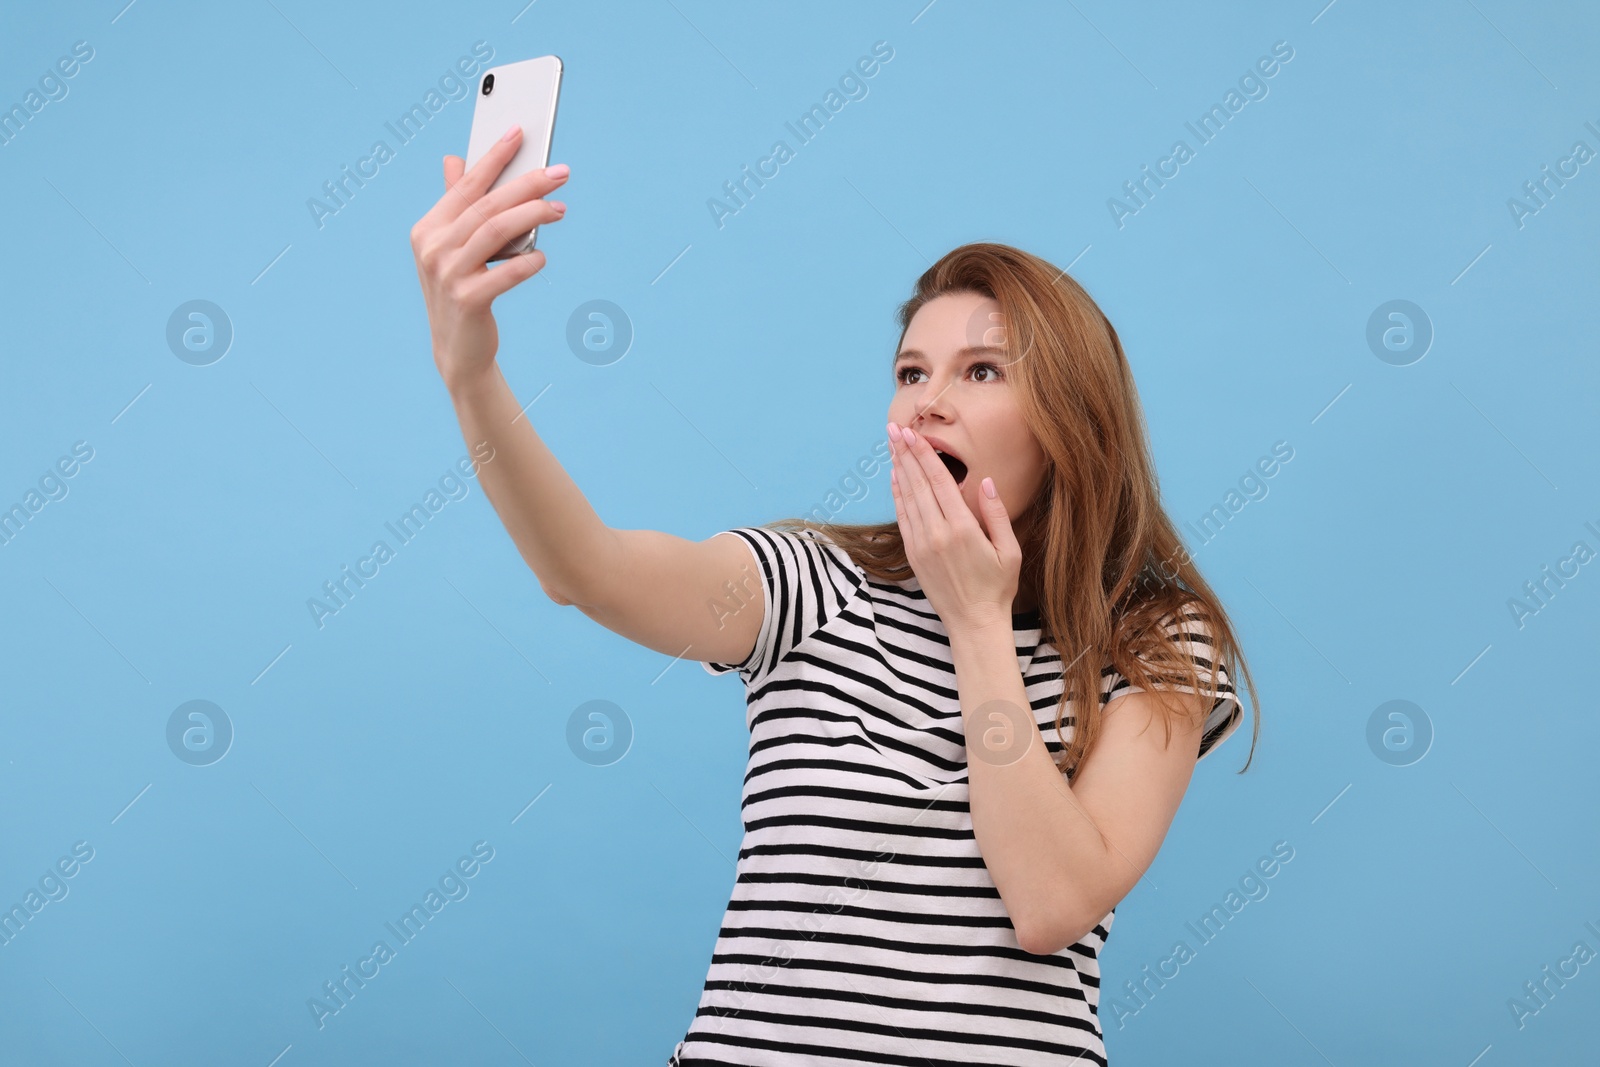 Photo of Shocked woman taking selfie on light blue background